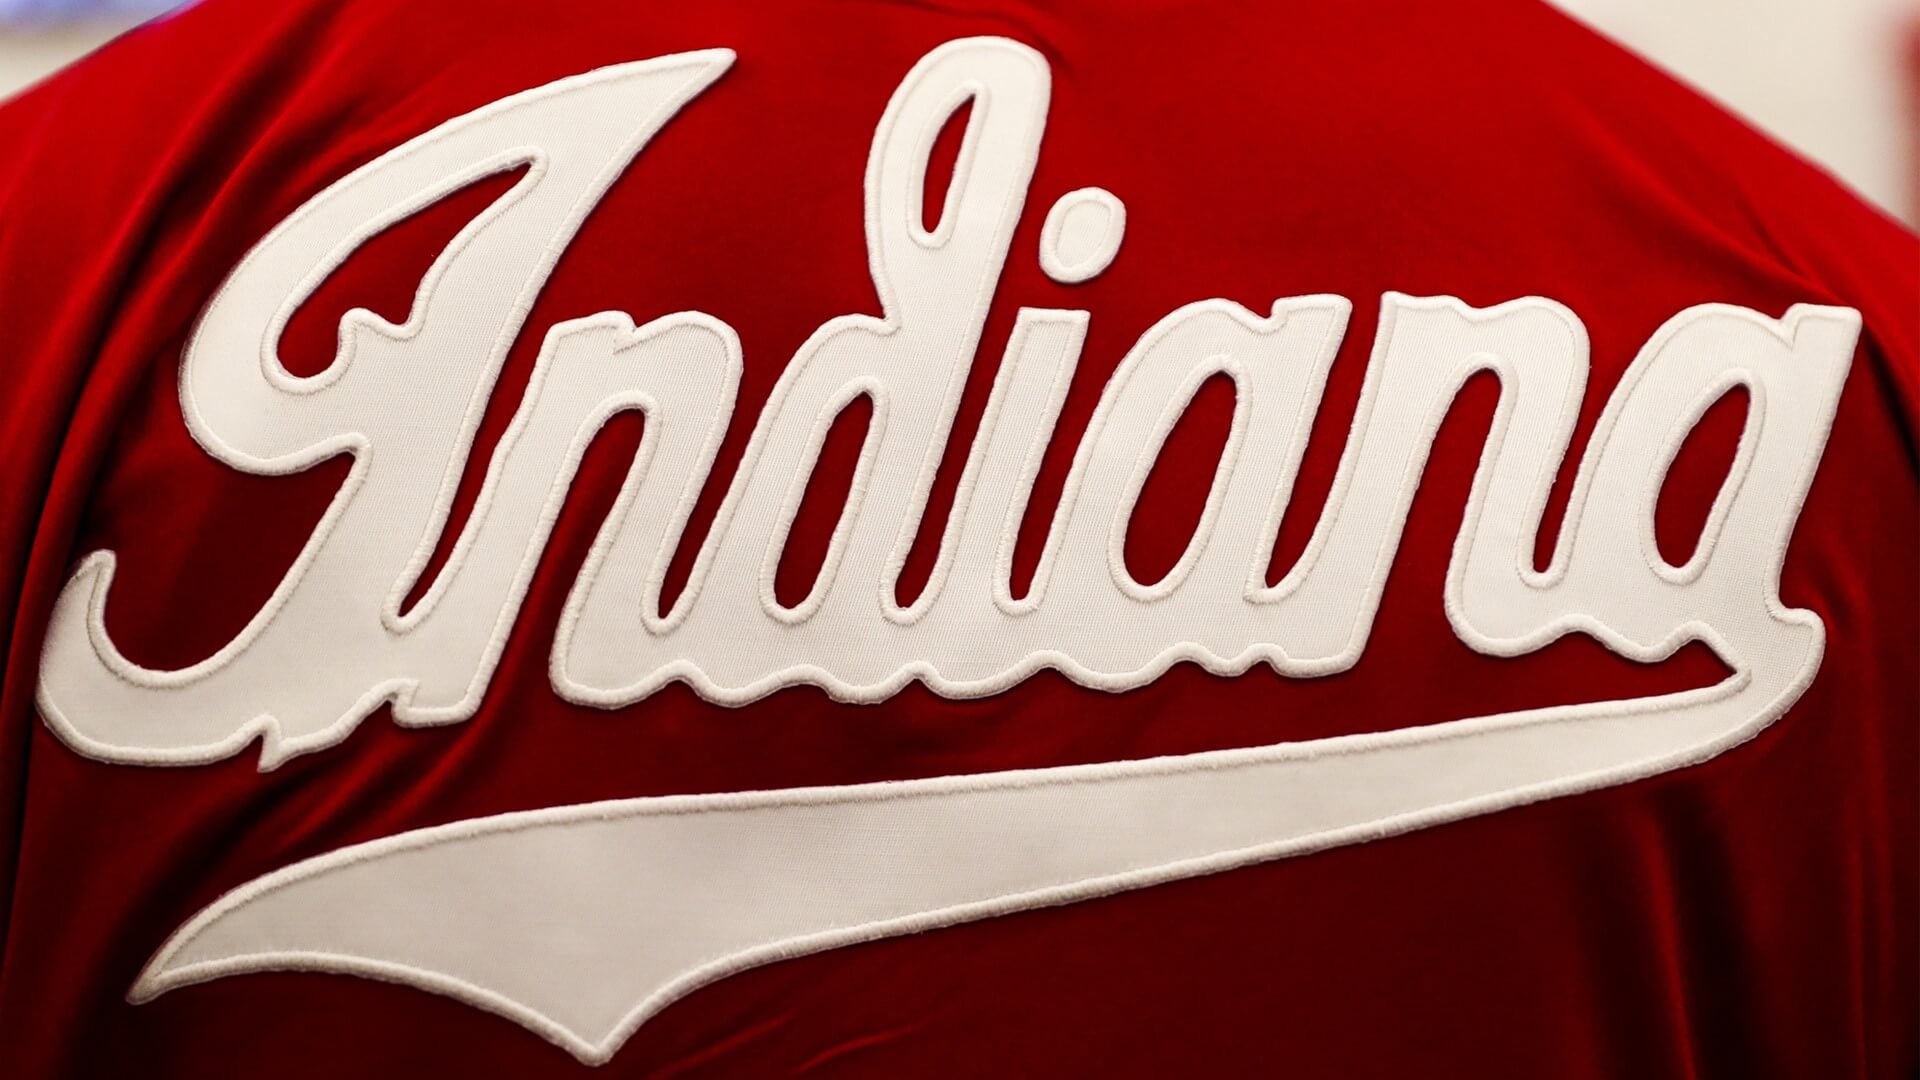 Indiana University Logos: A Journey Through Brand Identity